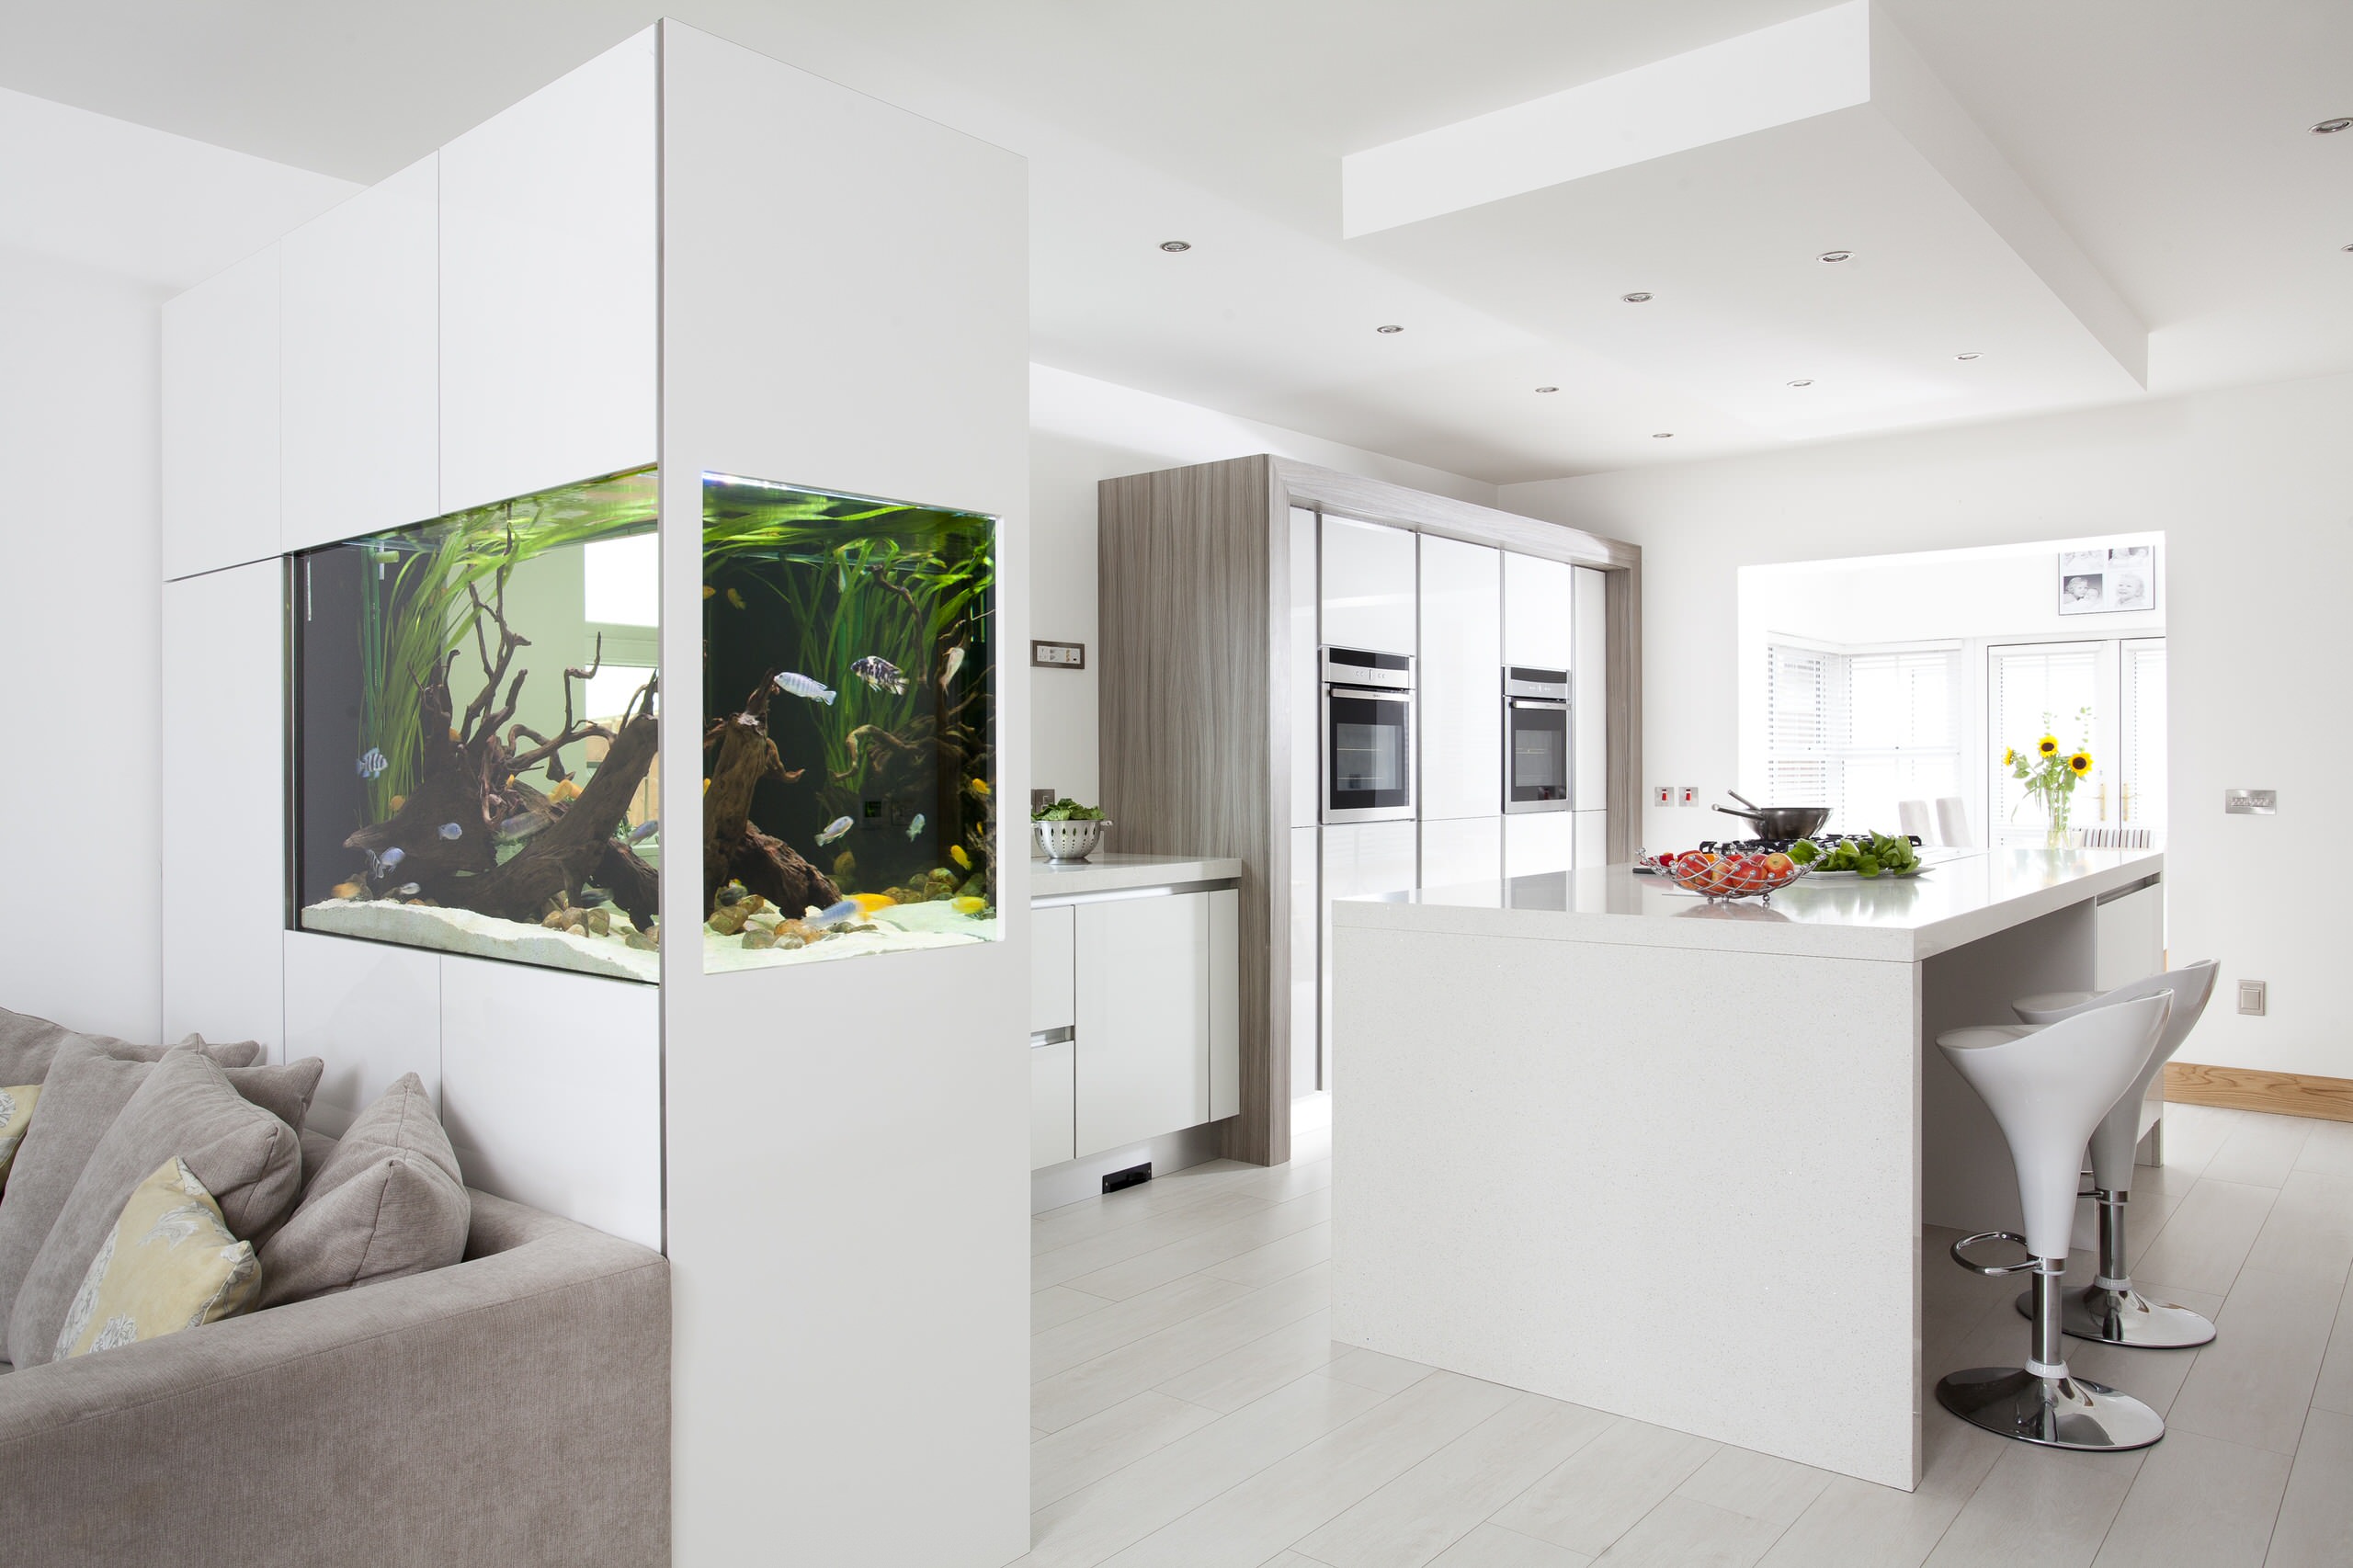 Aquarium Ideas: 13 Inspiring Ways to Add a Fishtank to Your Home | Houzz UK